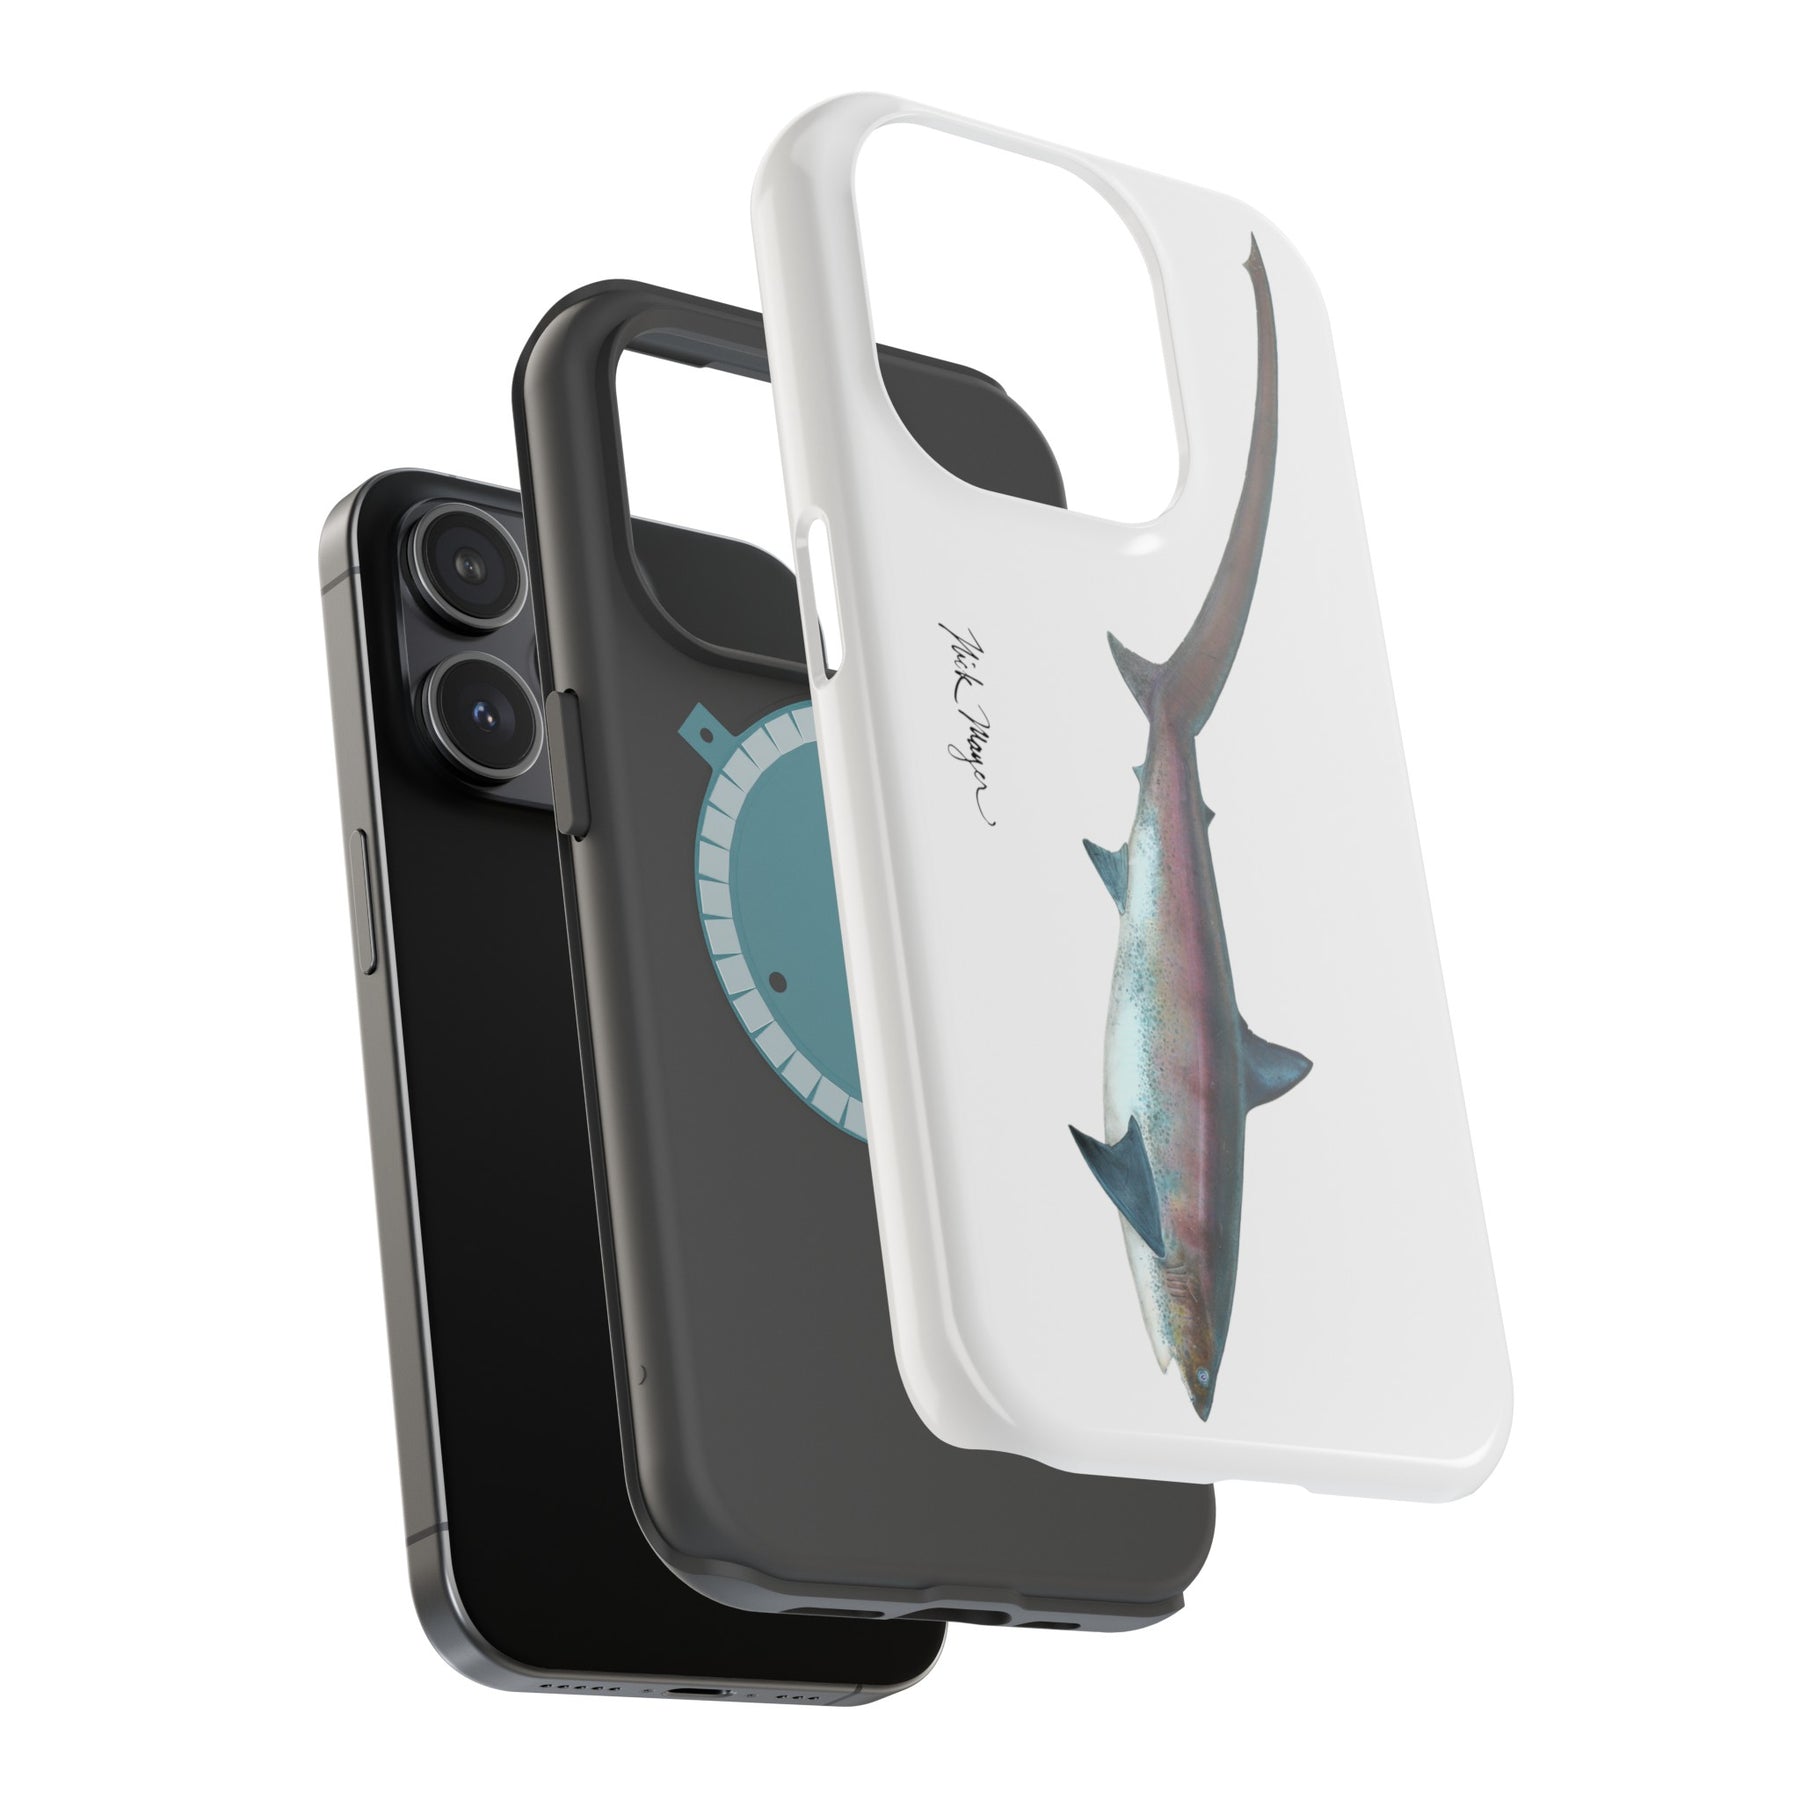 Thresher Shark MagSafe Black iPhone Case